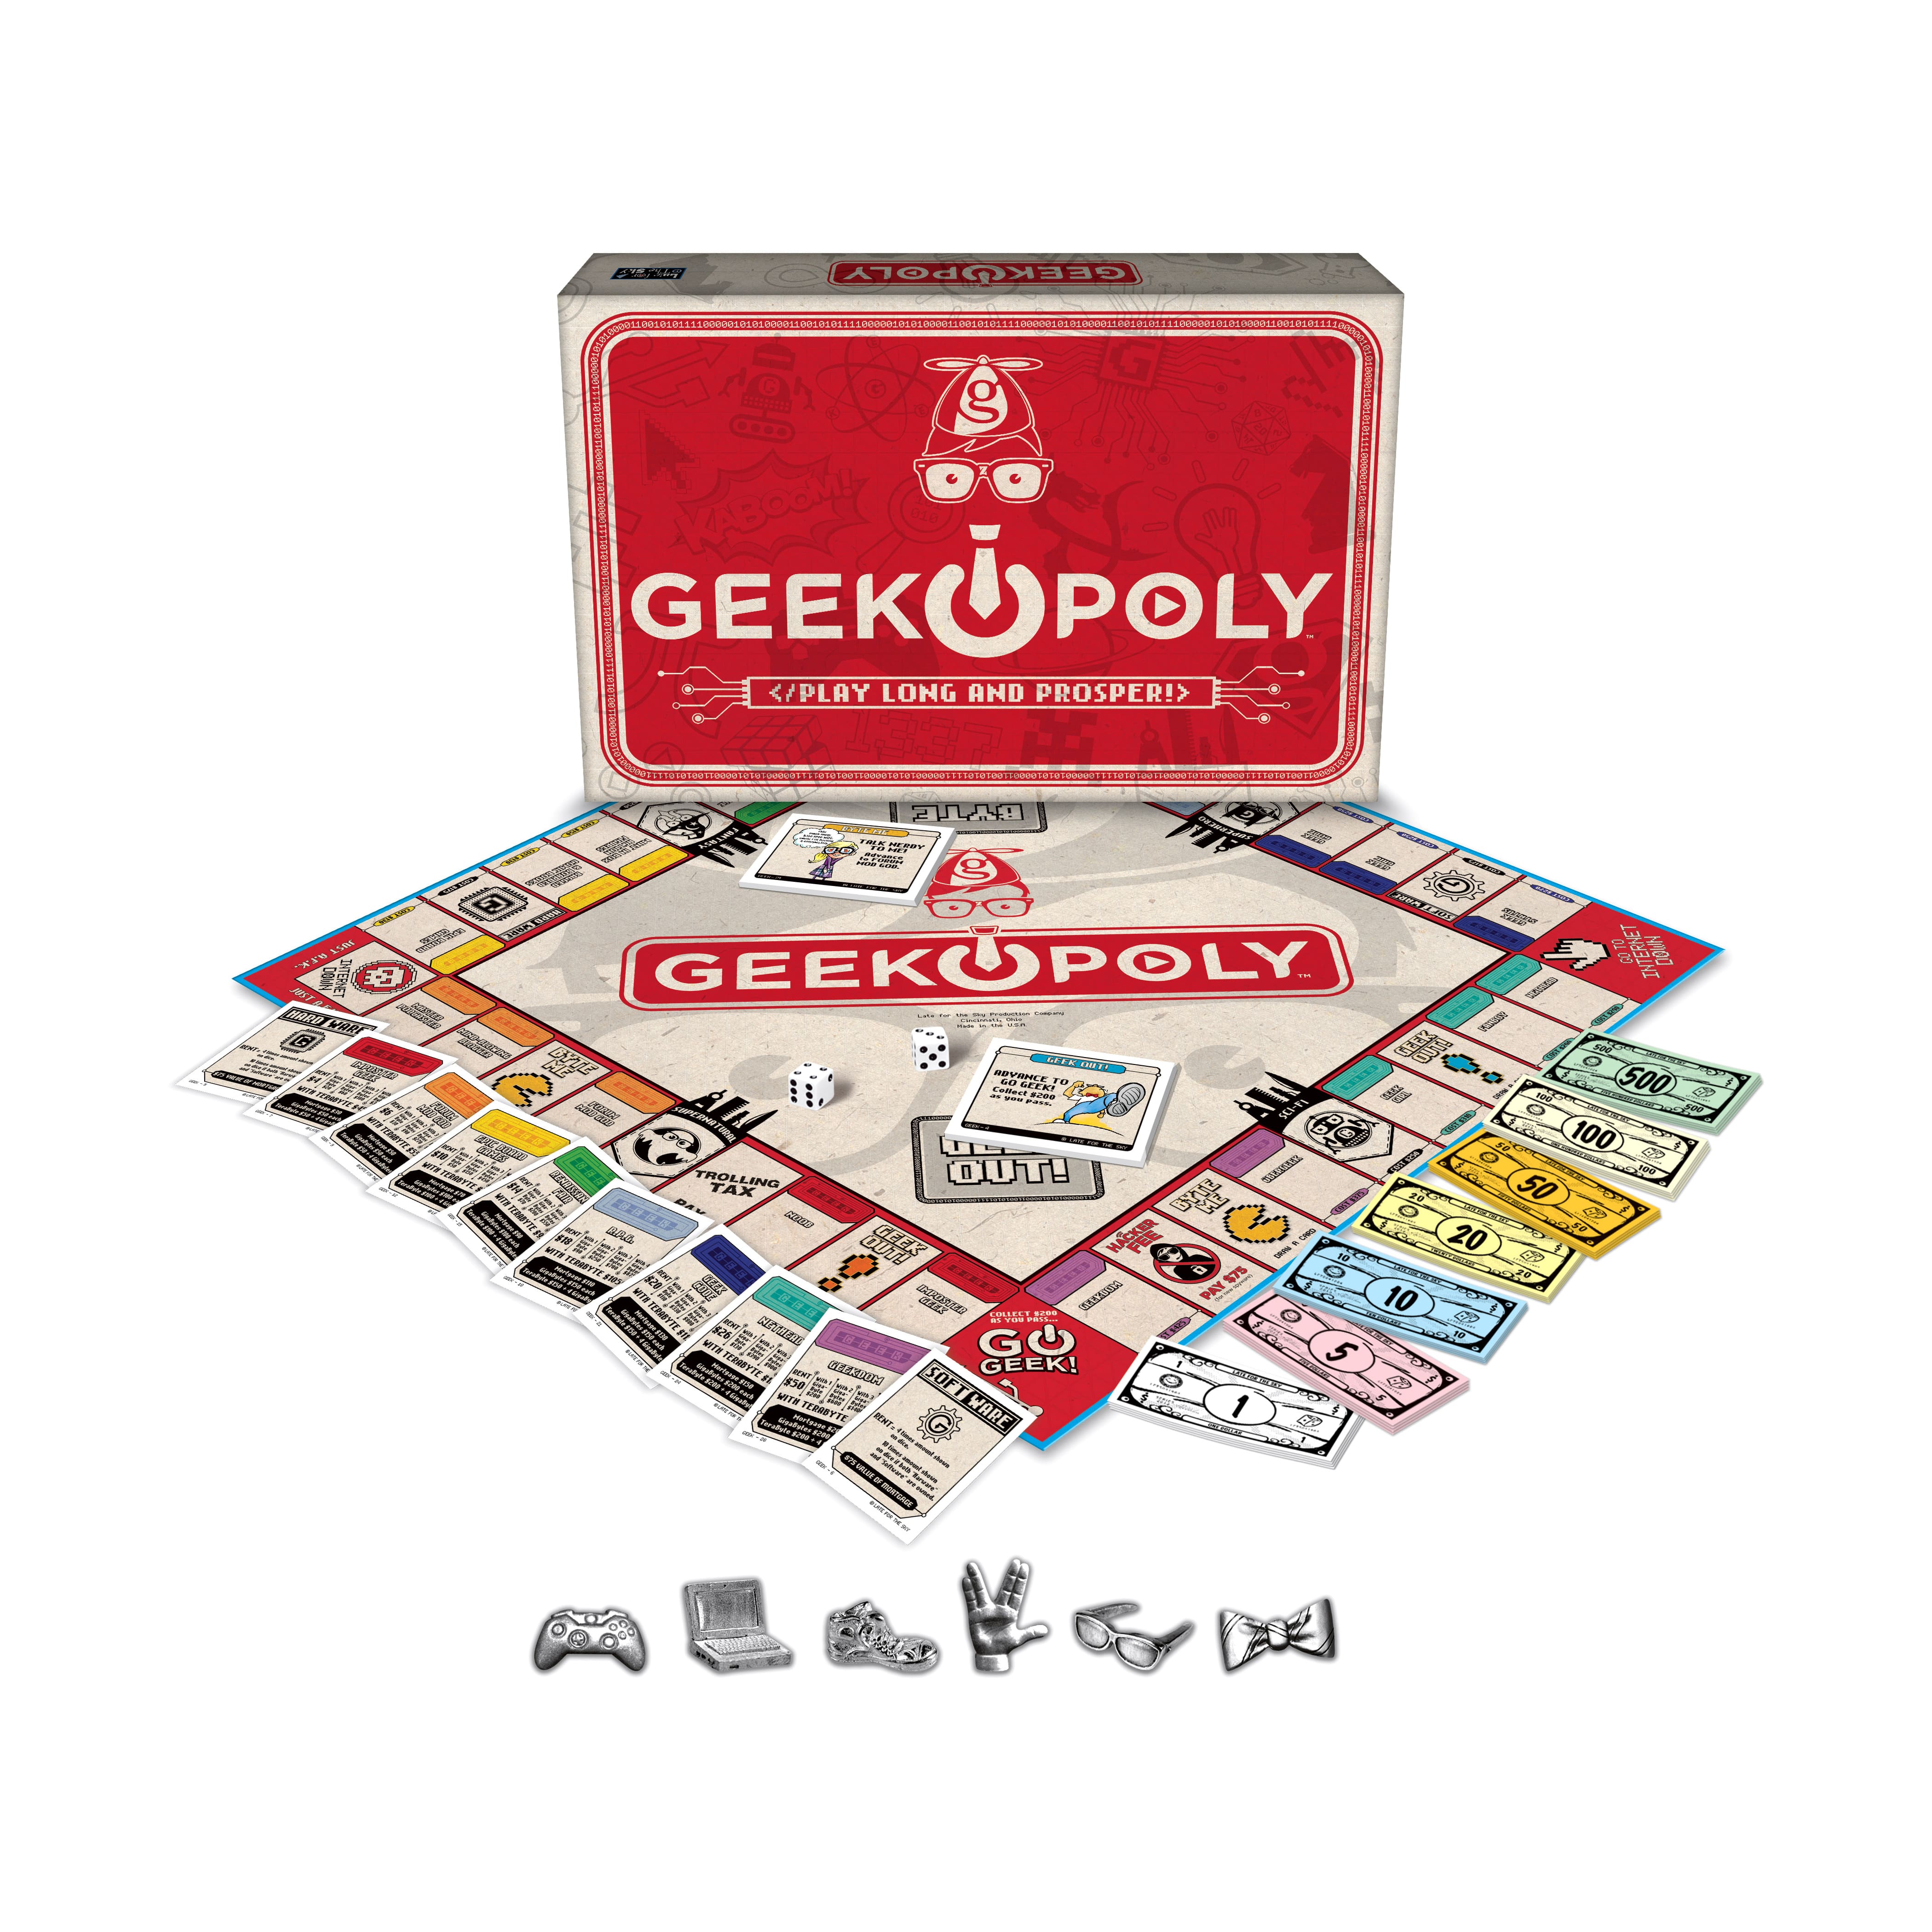 Geek-Opoly&#x2122; Board Game